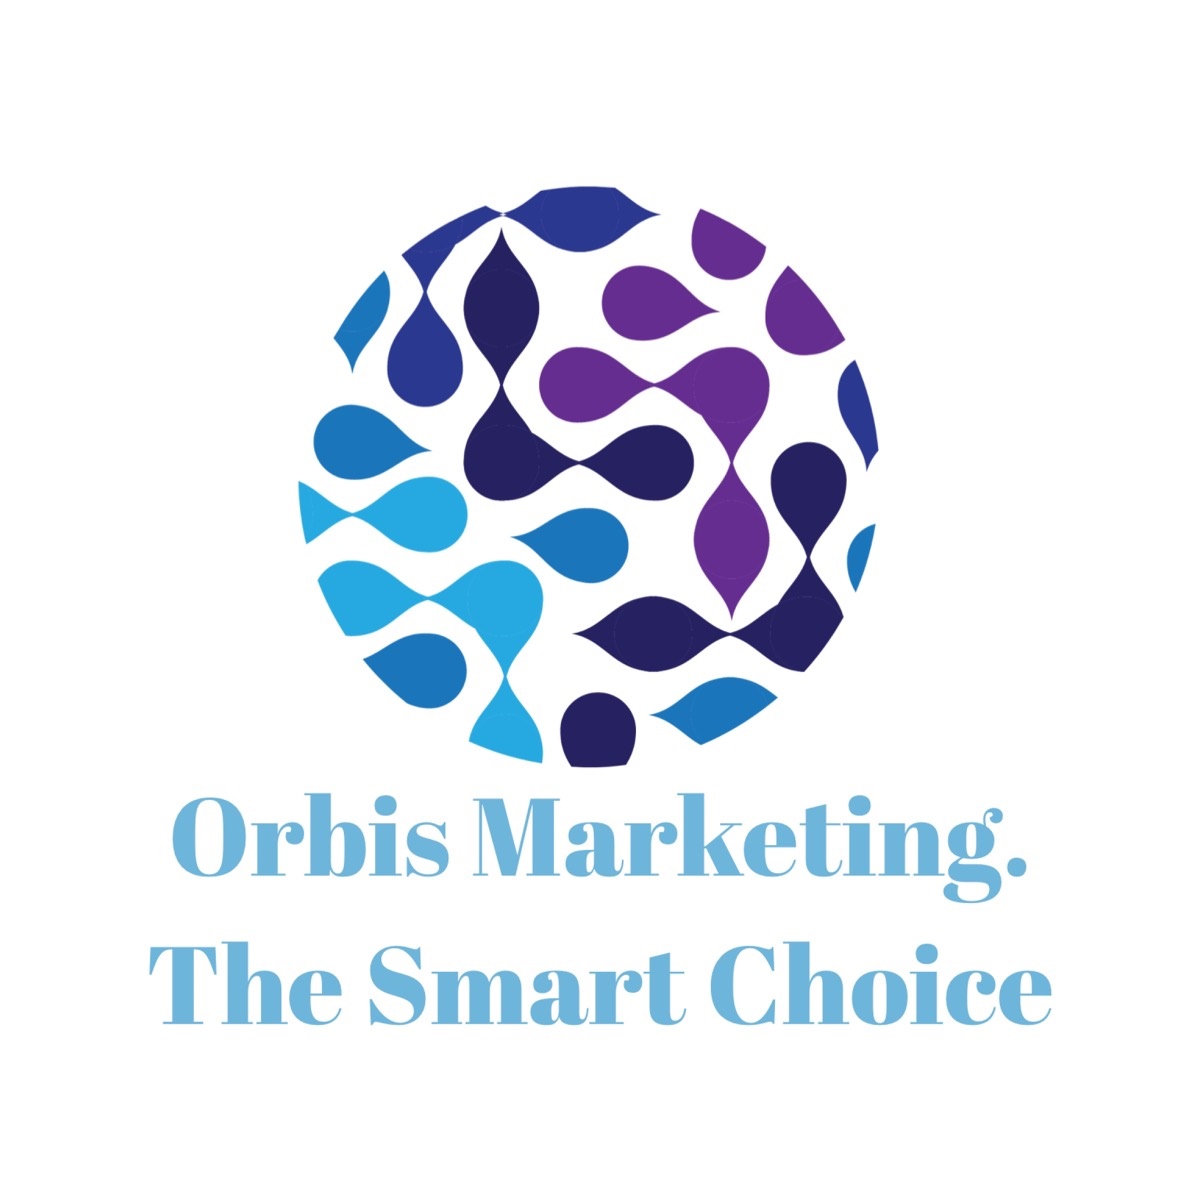 Orbis Marketing